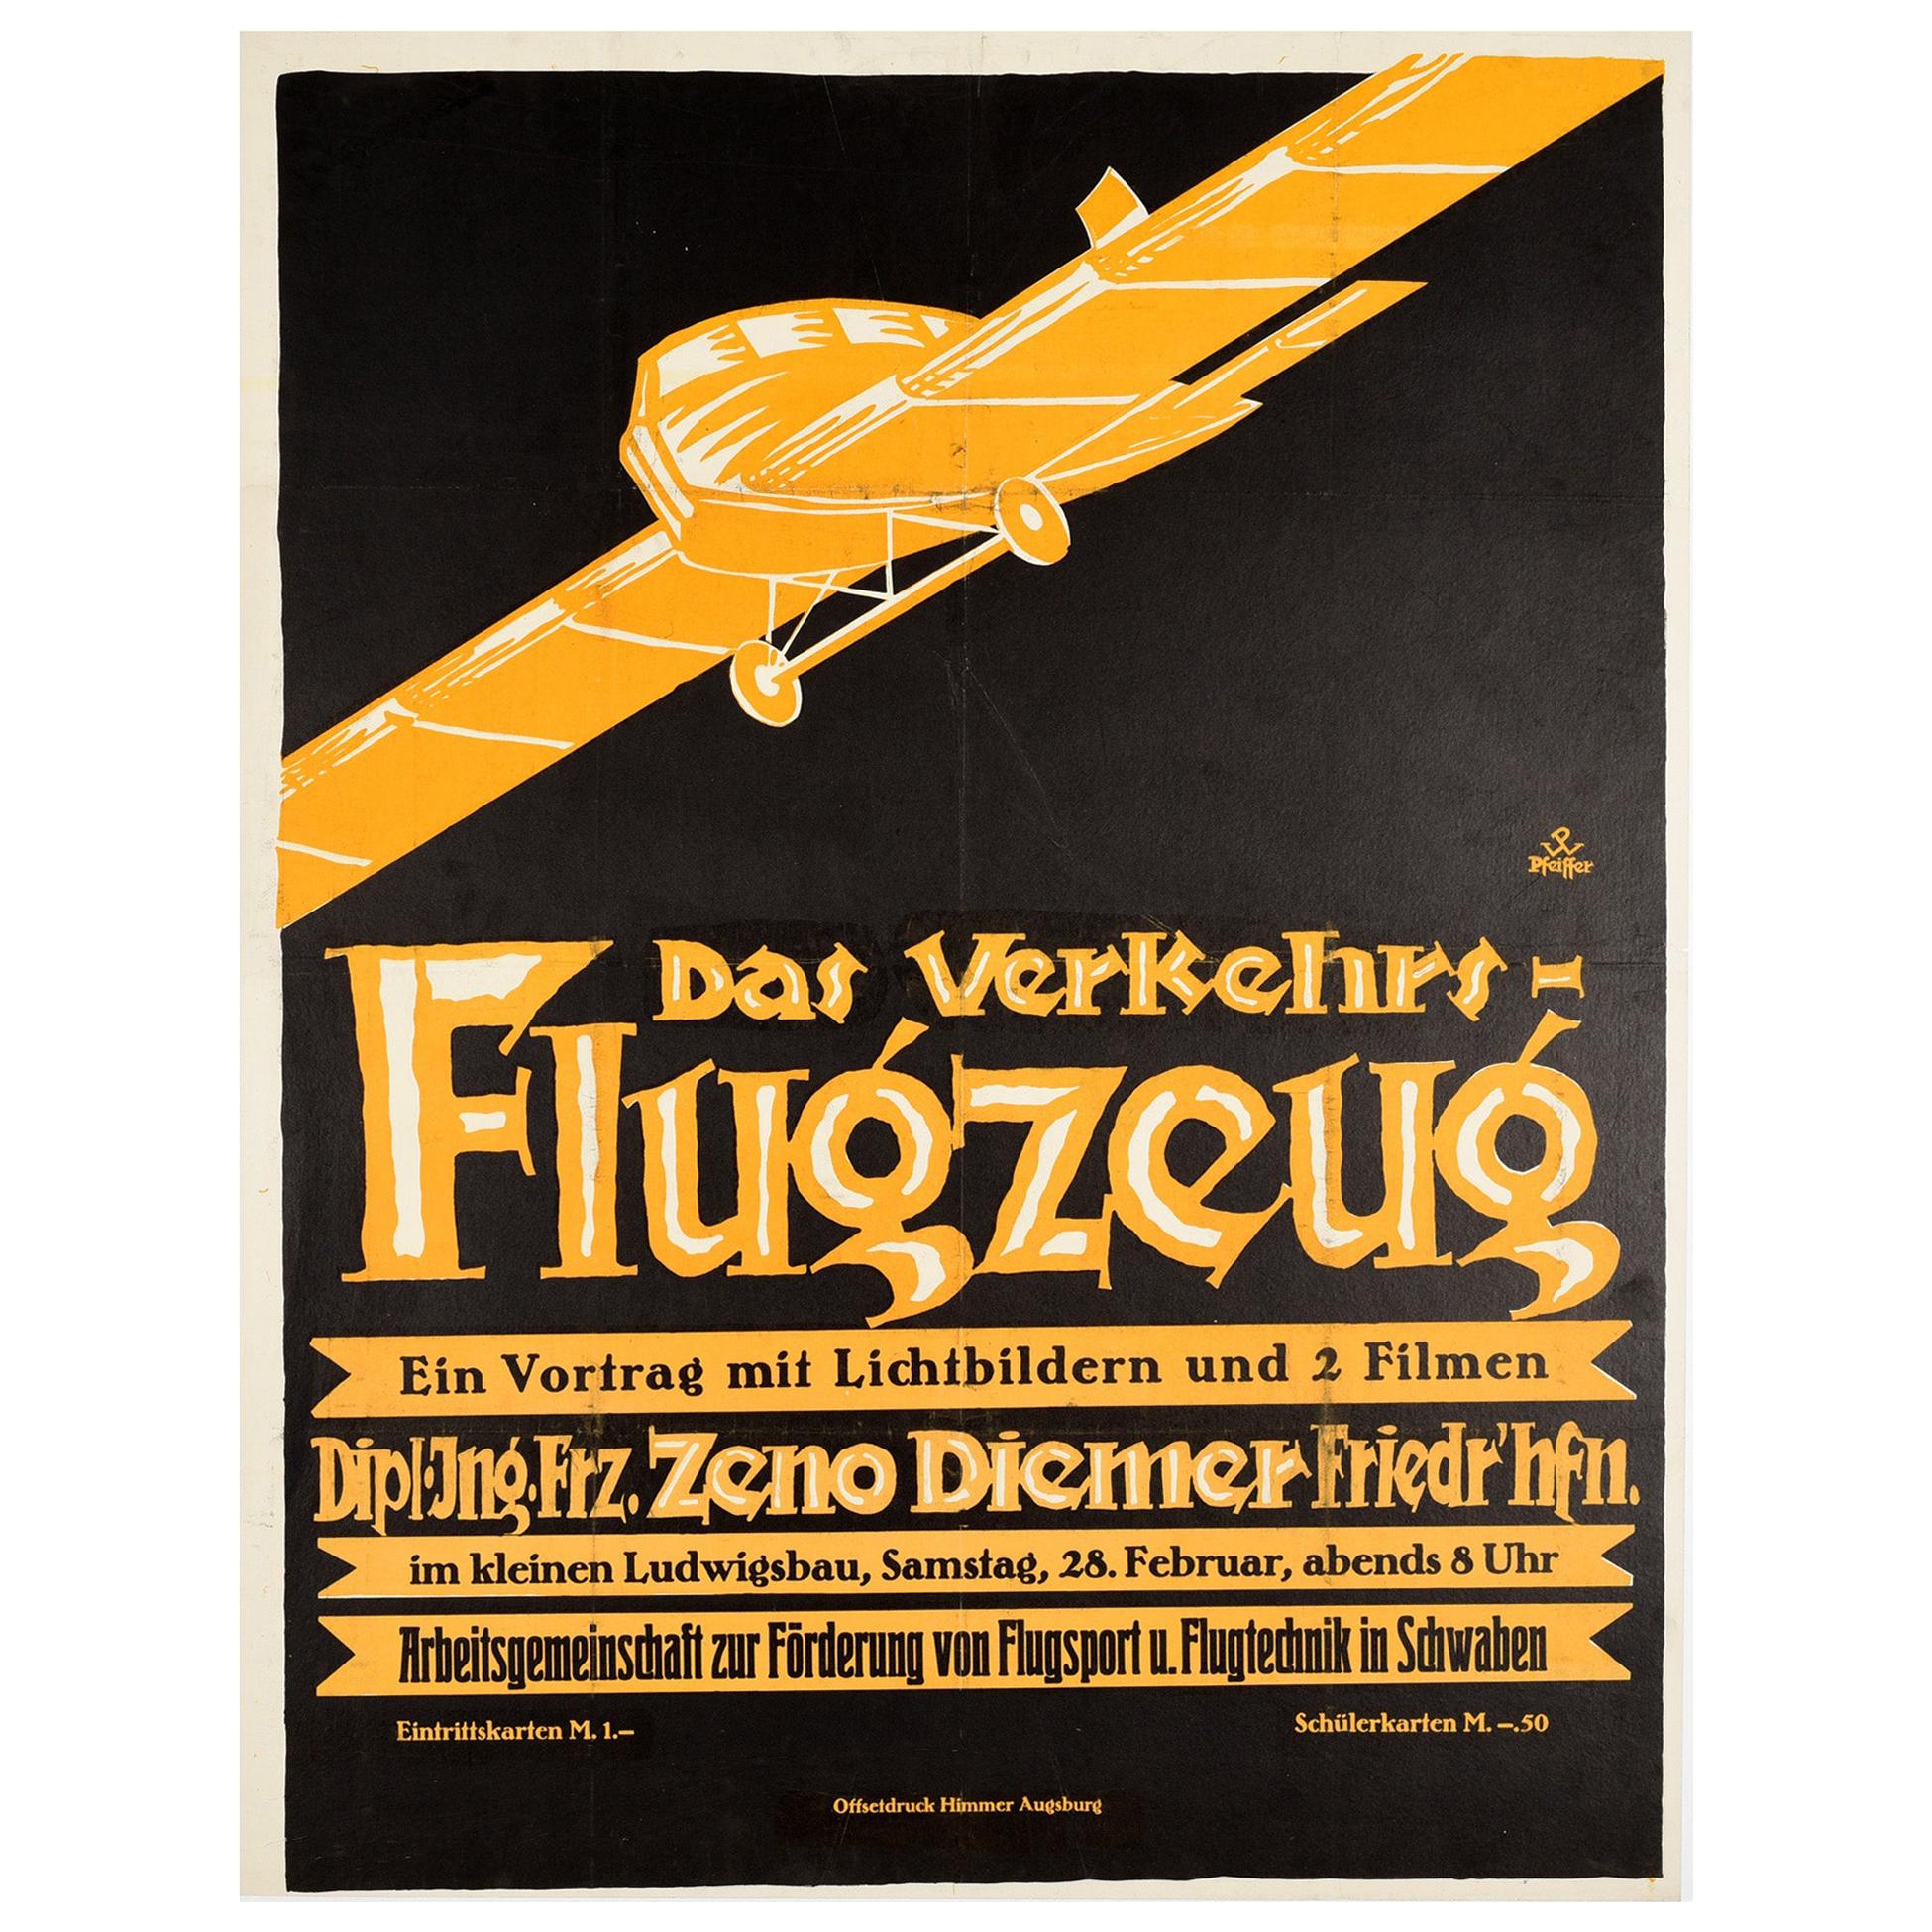 Original Vintage Poster Das Verkehrsflugzeug Airliner Lecture Photographs Films For Sale